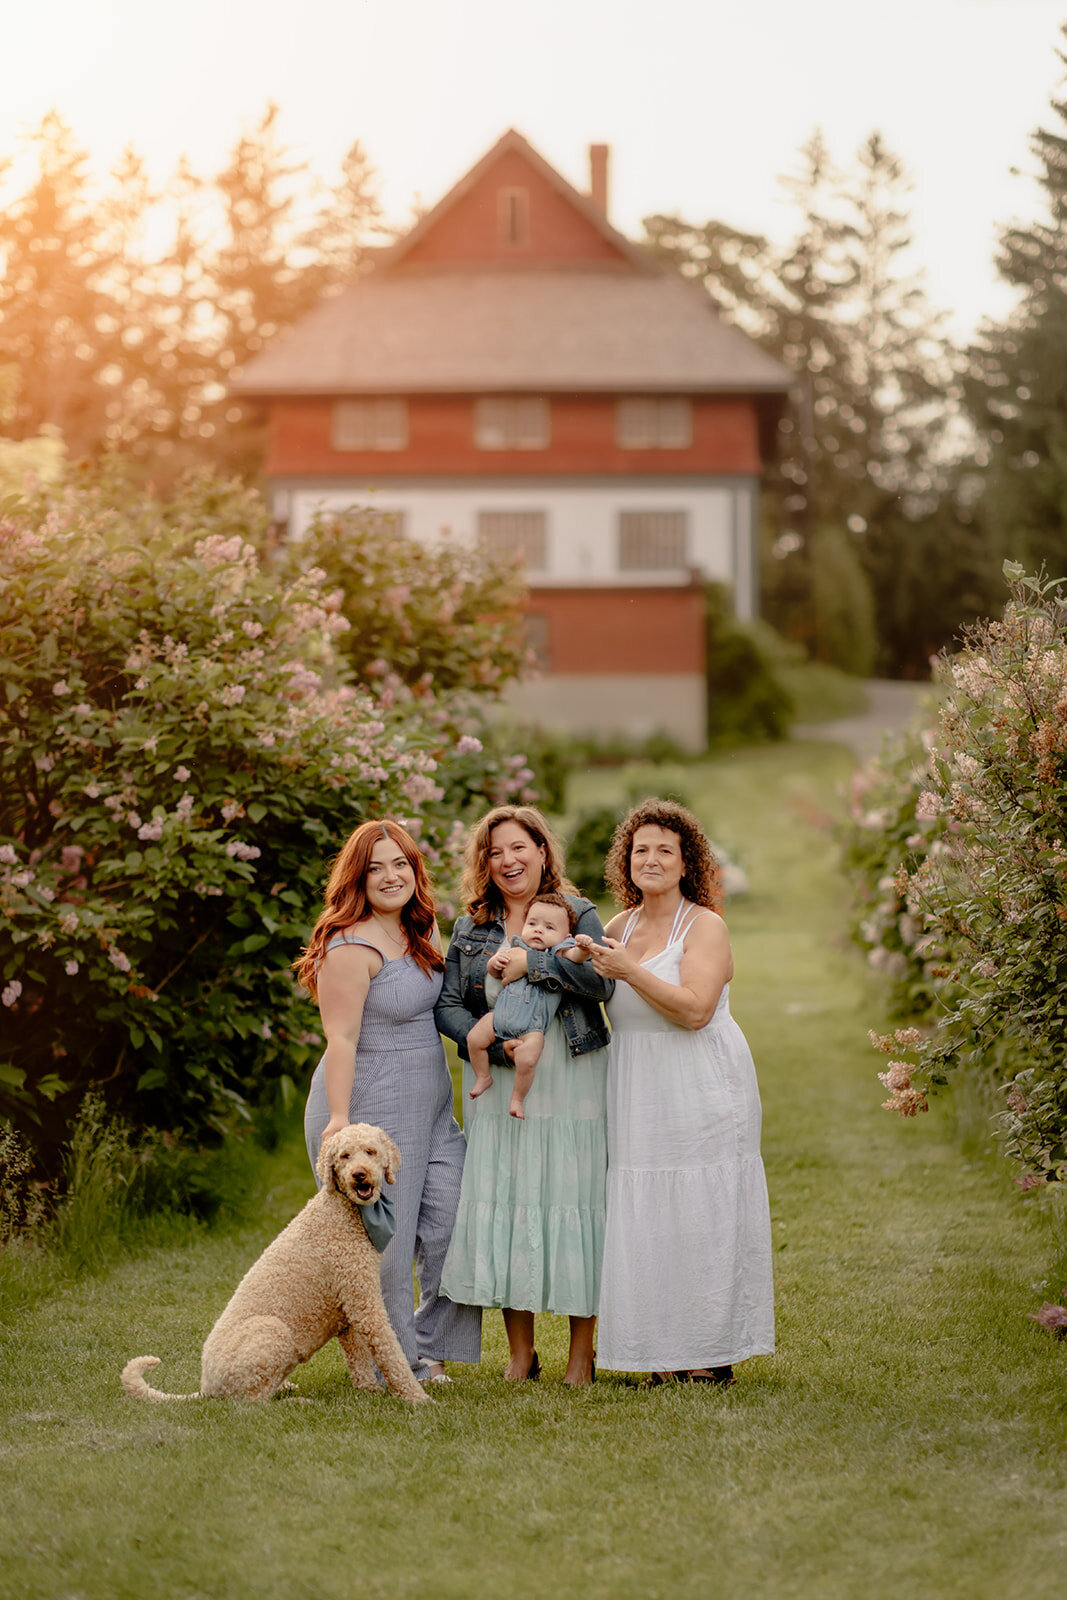 Ottawa Family Photographer - North Saplings Photography - Ina Soulis